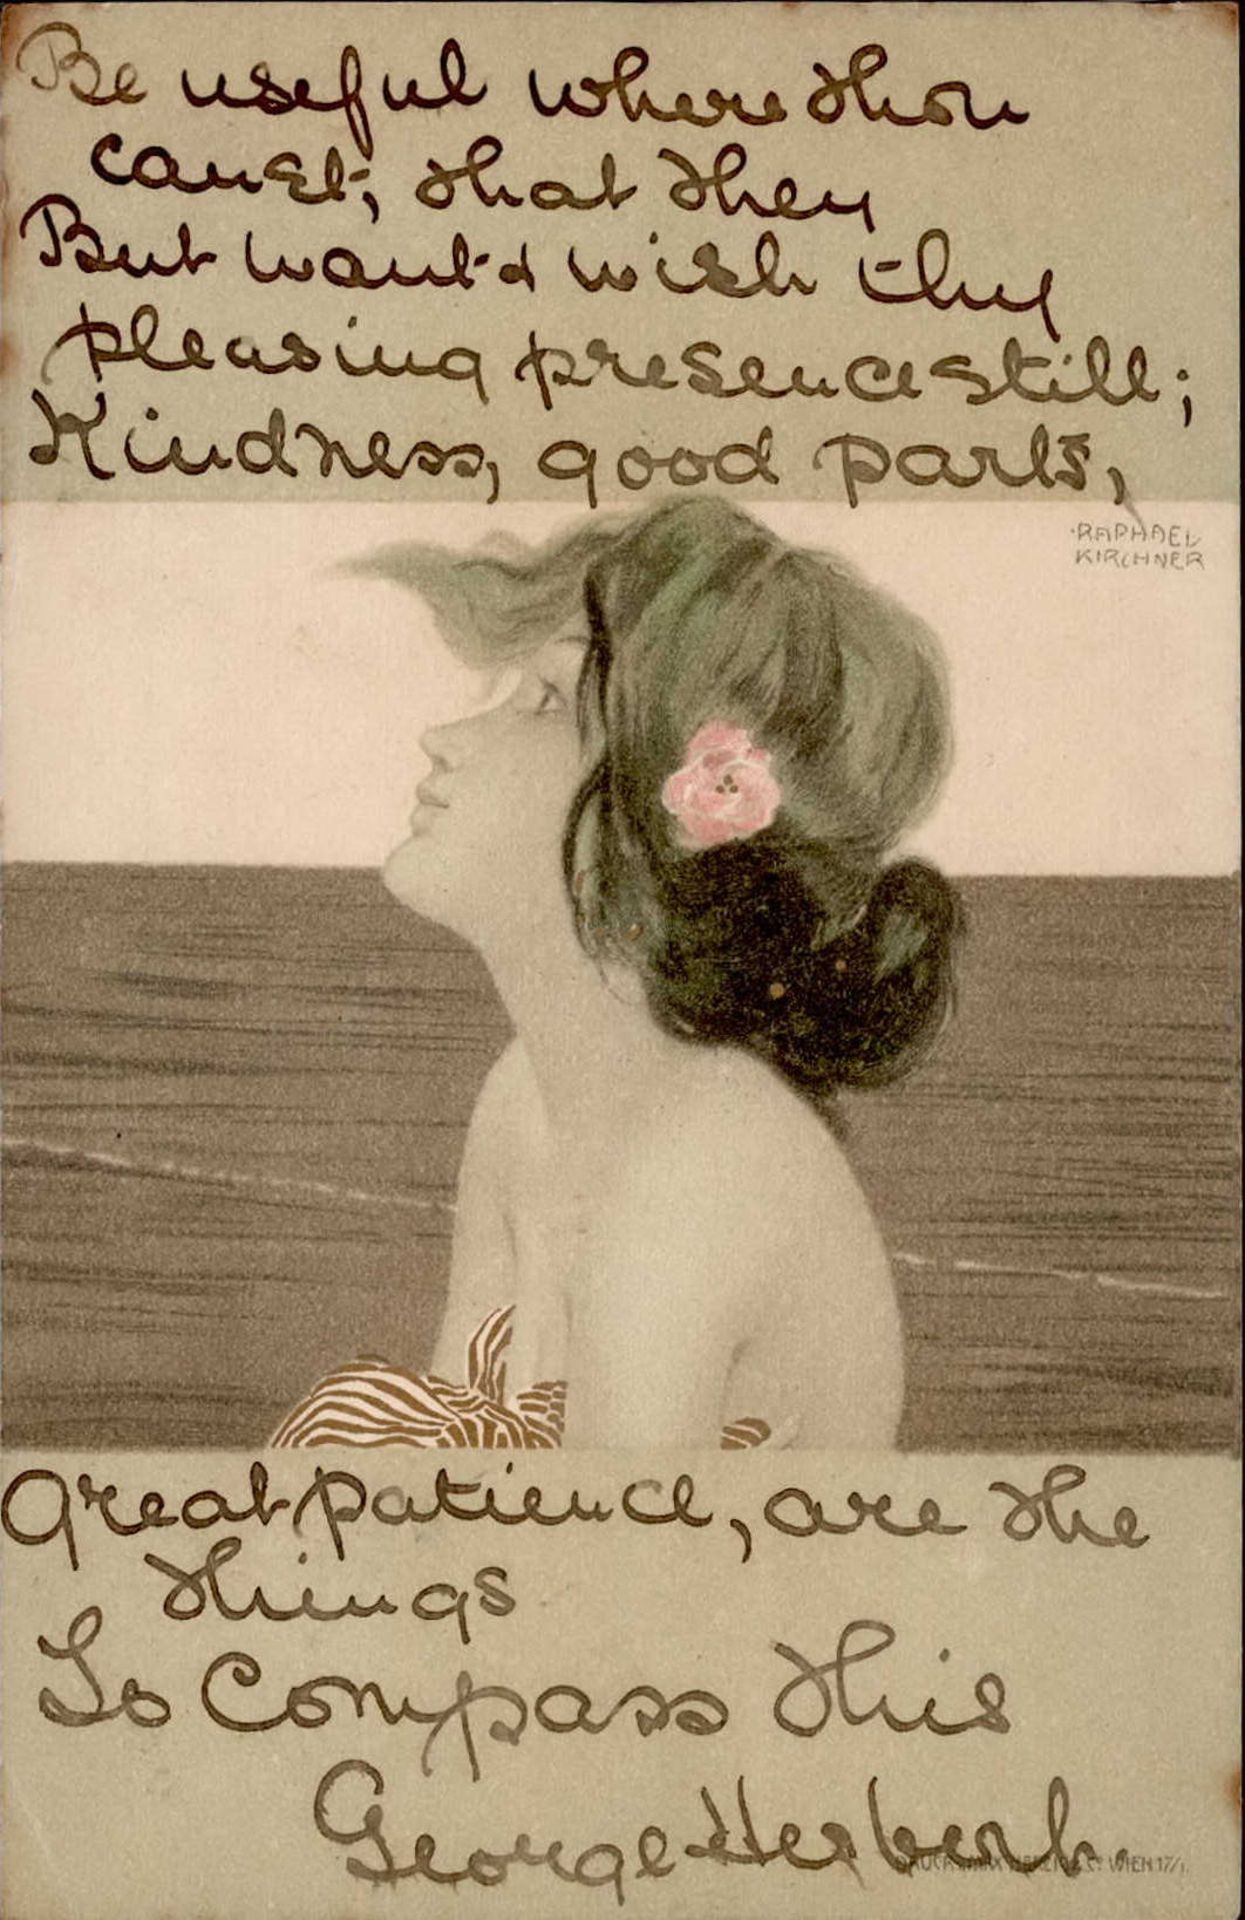 Kirchner, Raphael Frau mit Blume im Haar I-II (kl. Eckbug)